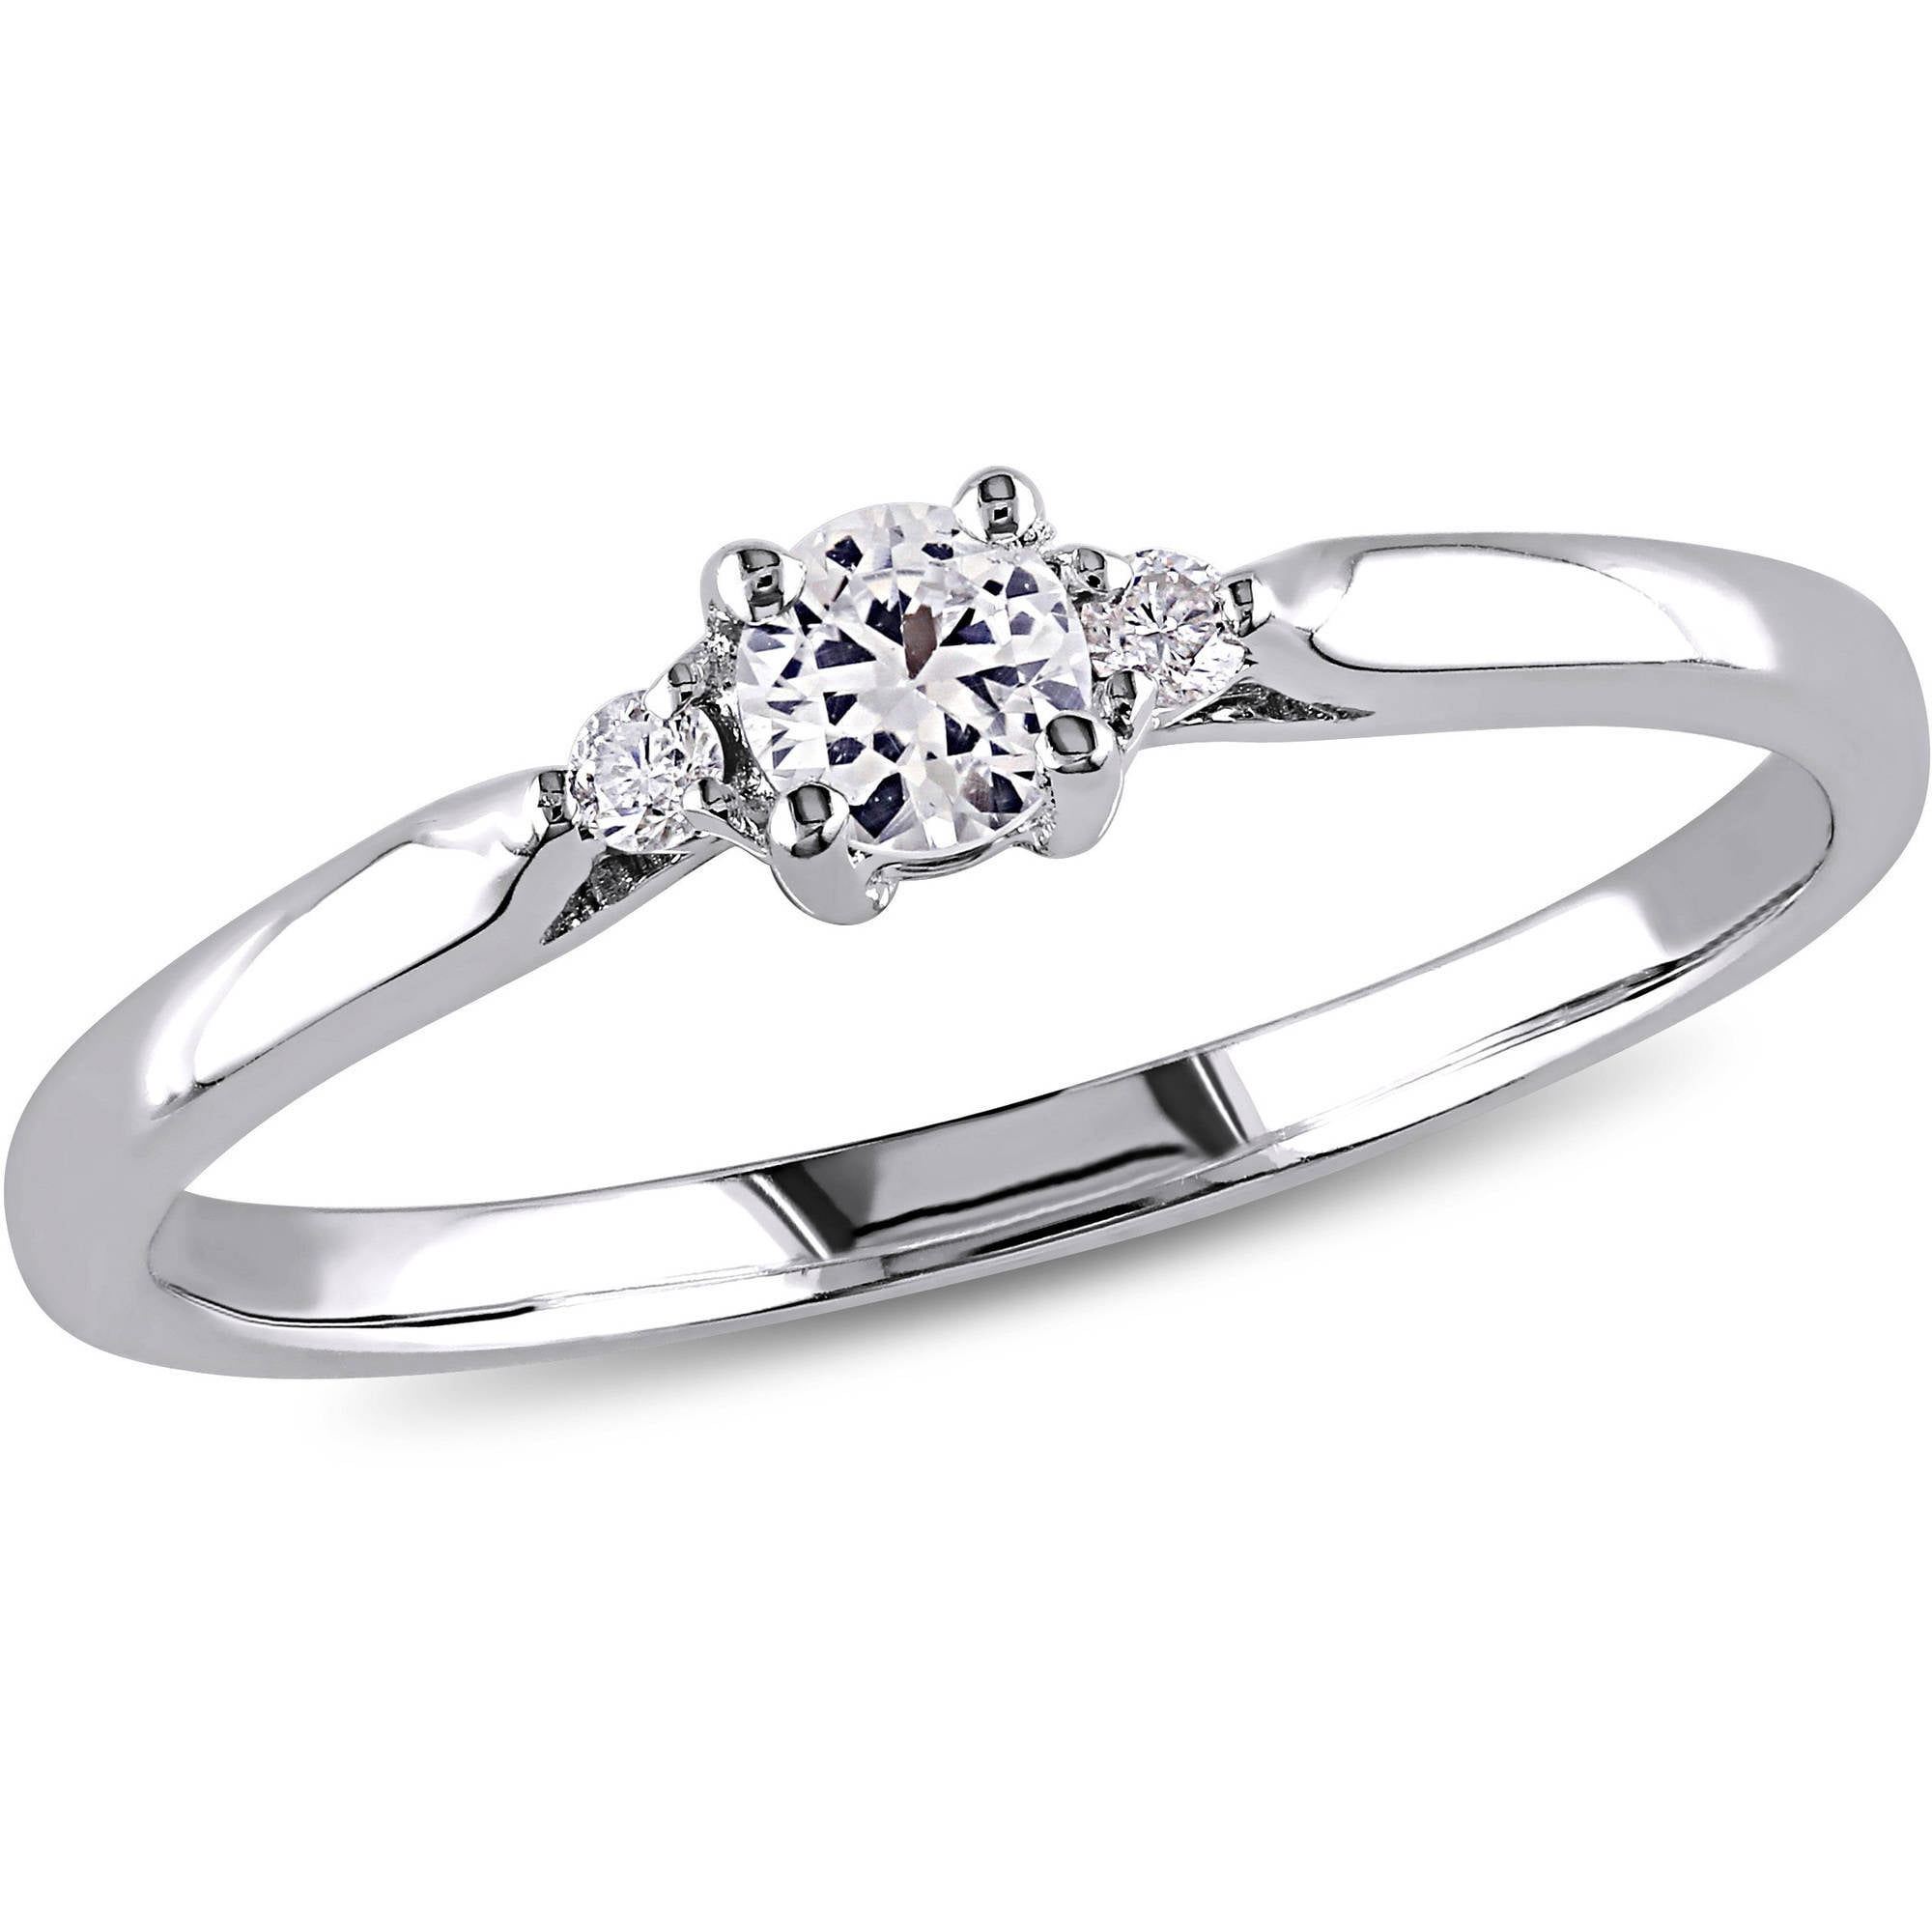 BOHG Jewelry Womens Fashion Silver-Plate Cubic Zirconia CZ Heart Infinity Symbol Ring Wedding Band